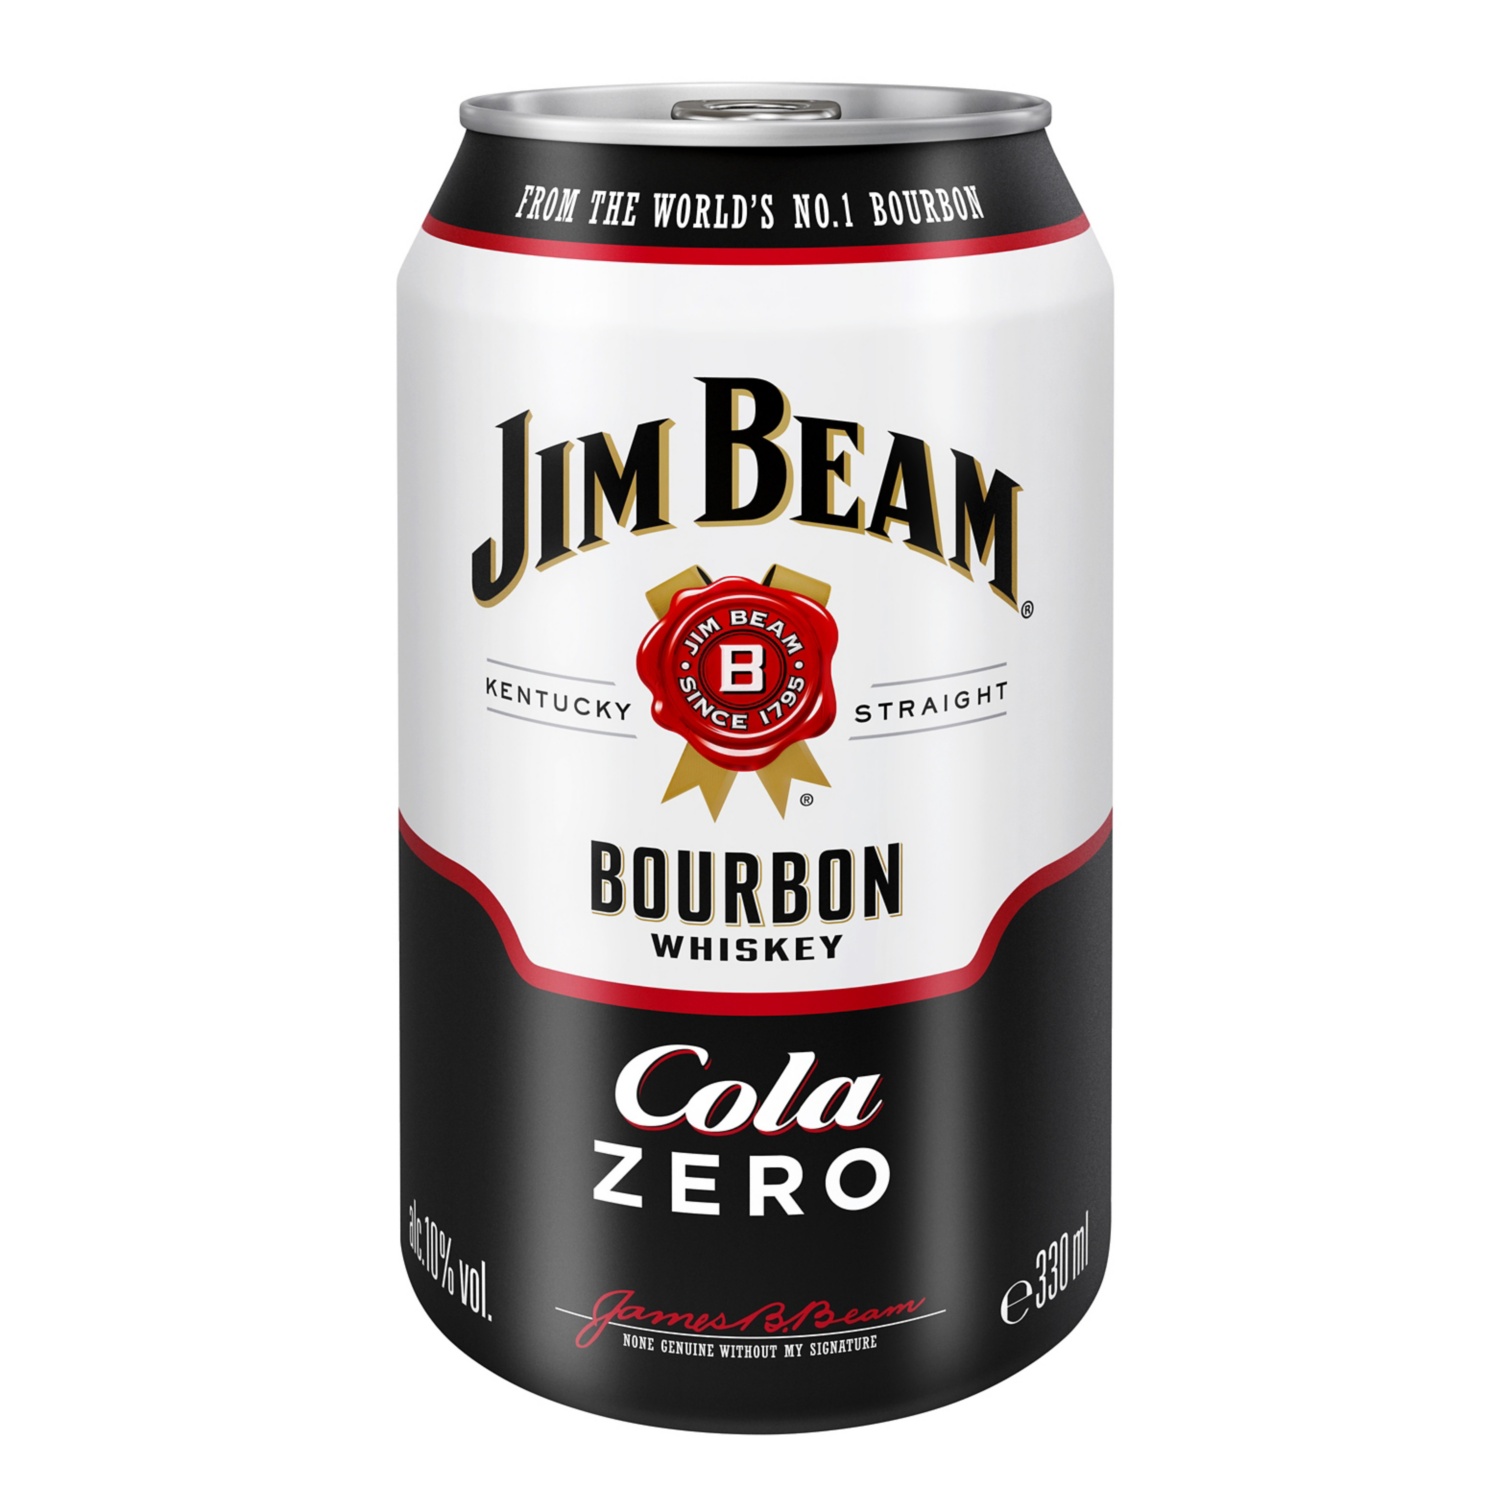 JIM BEAM® & Cola/ Cola Zero/ JIM BEAM® & Black Ice Tea Lemon 0,33 l